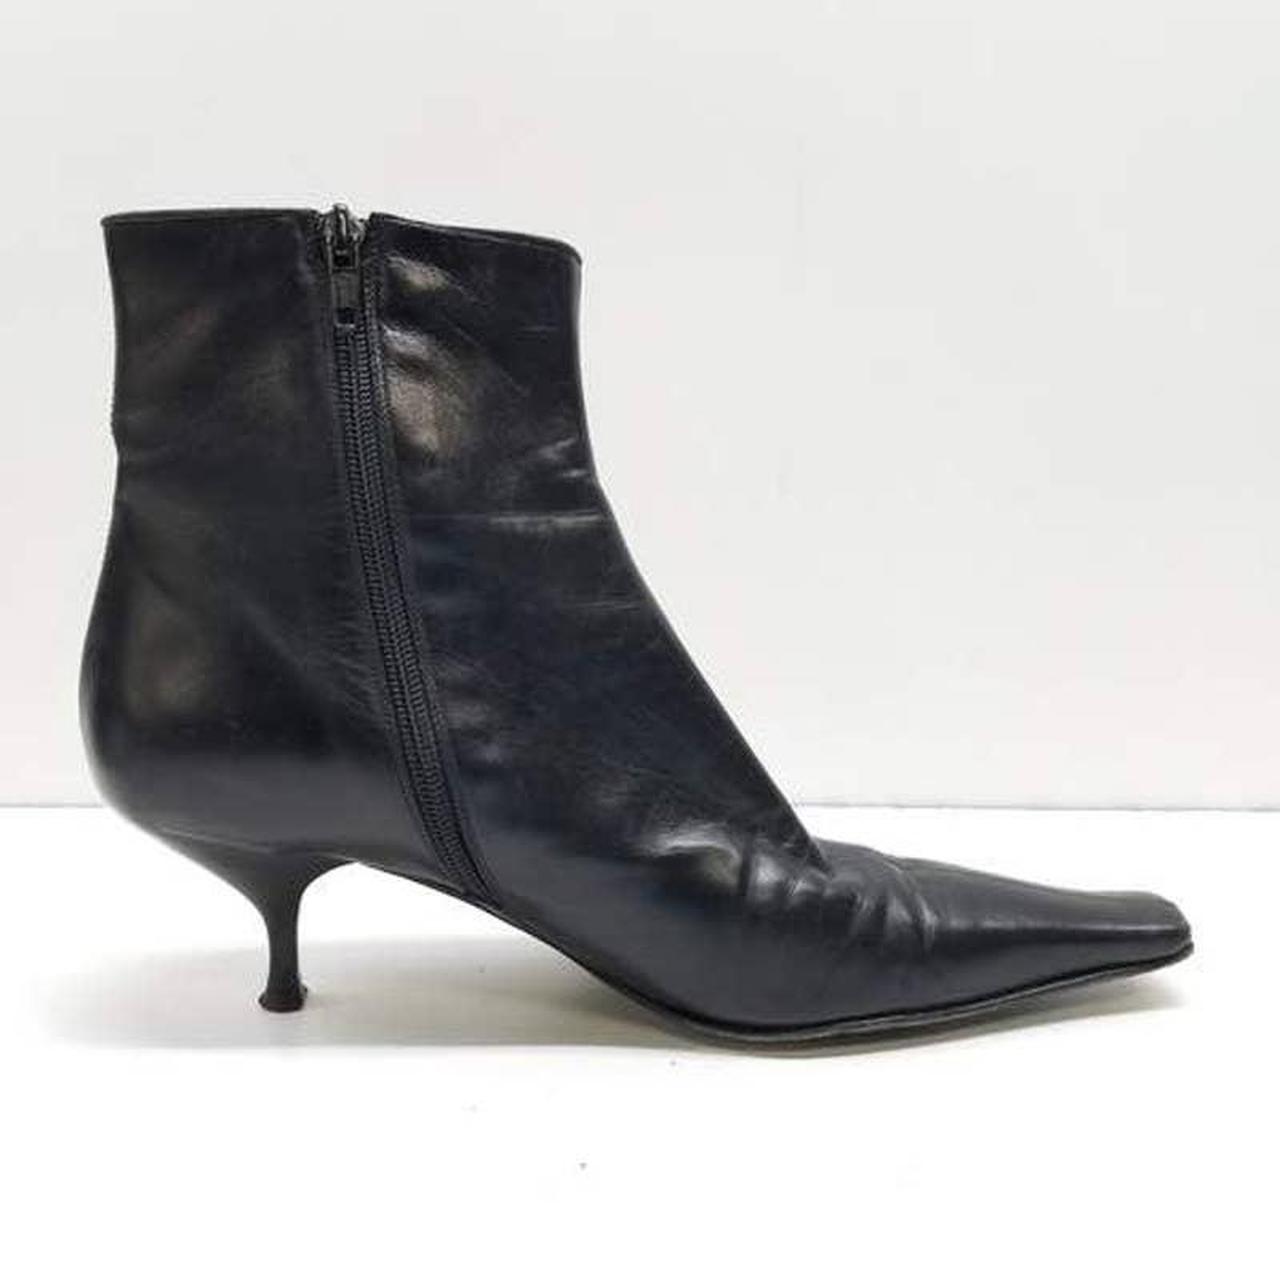 Saks Fifth Avenue Shoes Womens Black Slip On - Depop